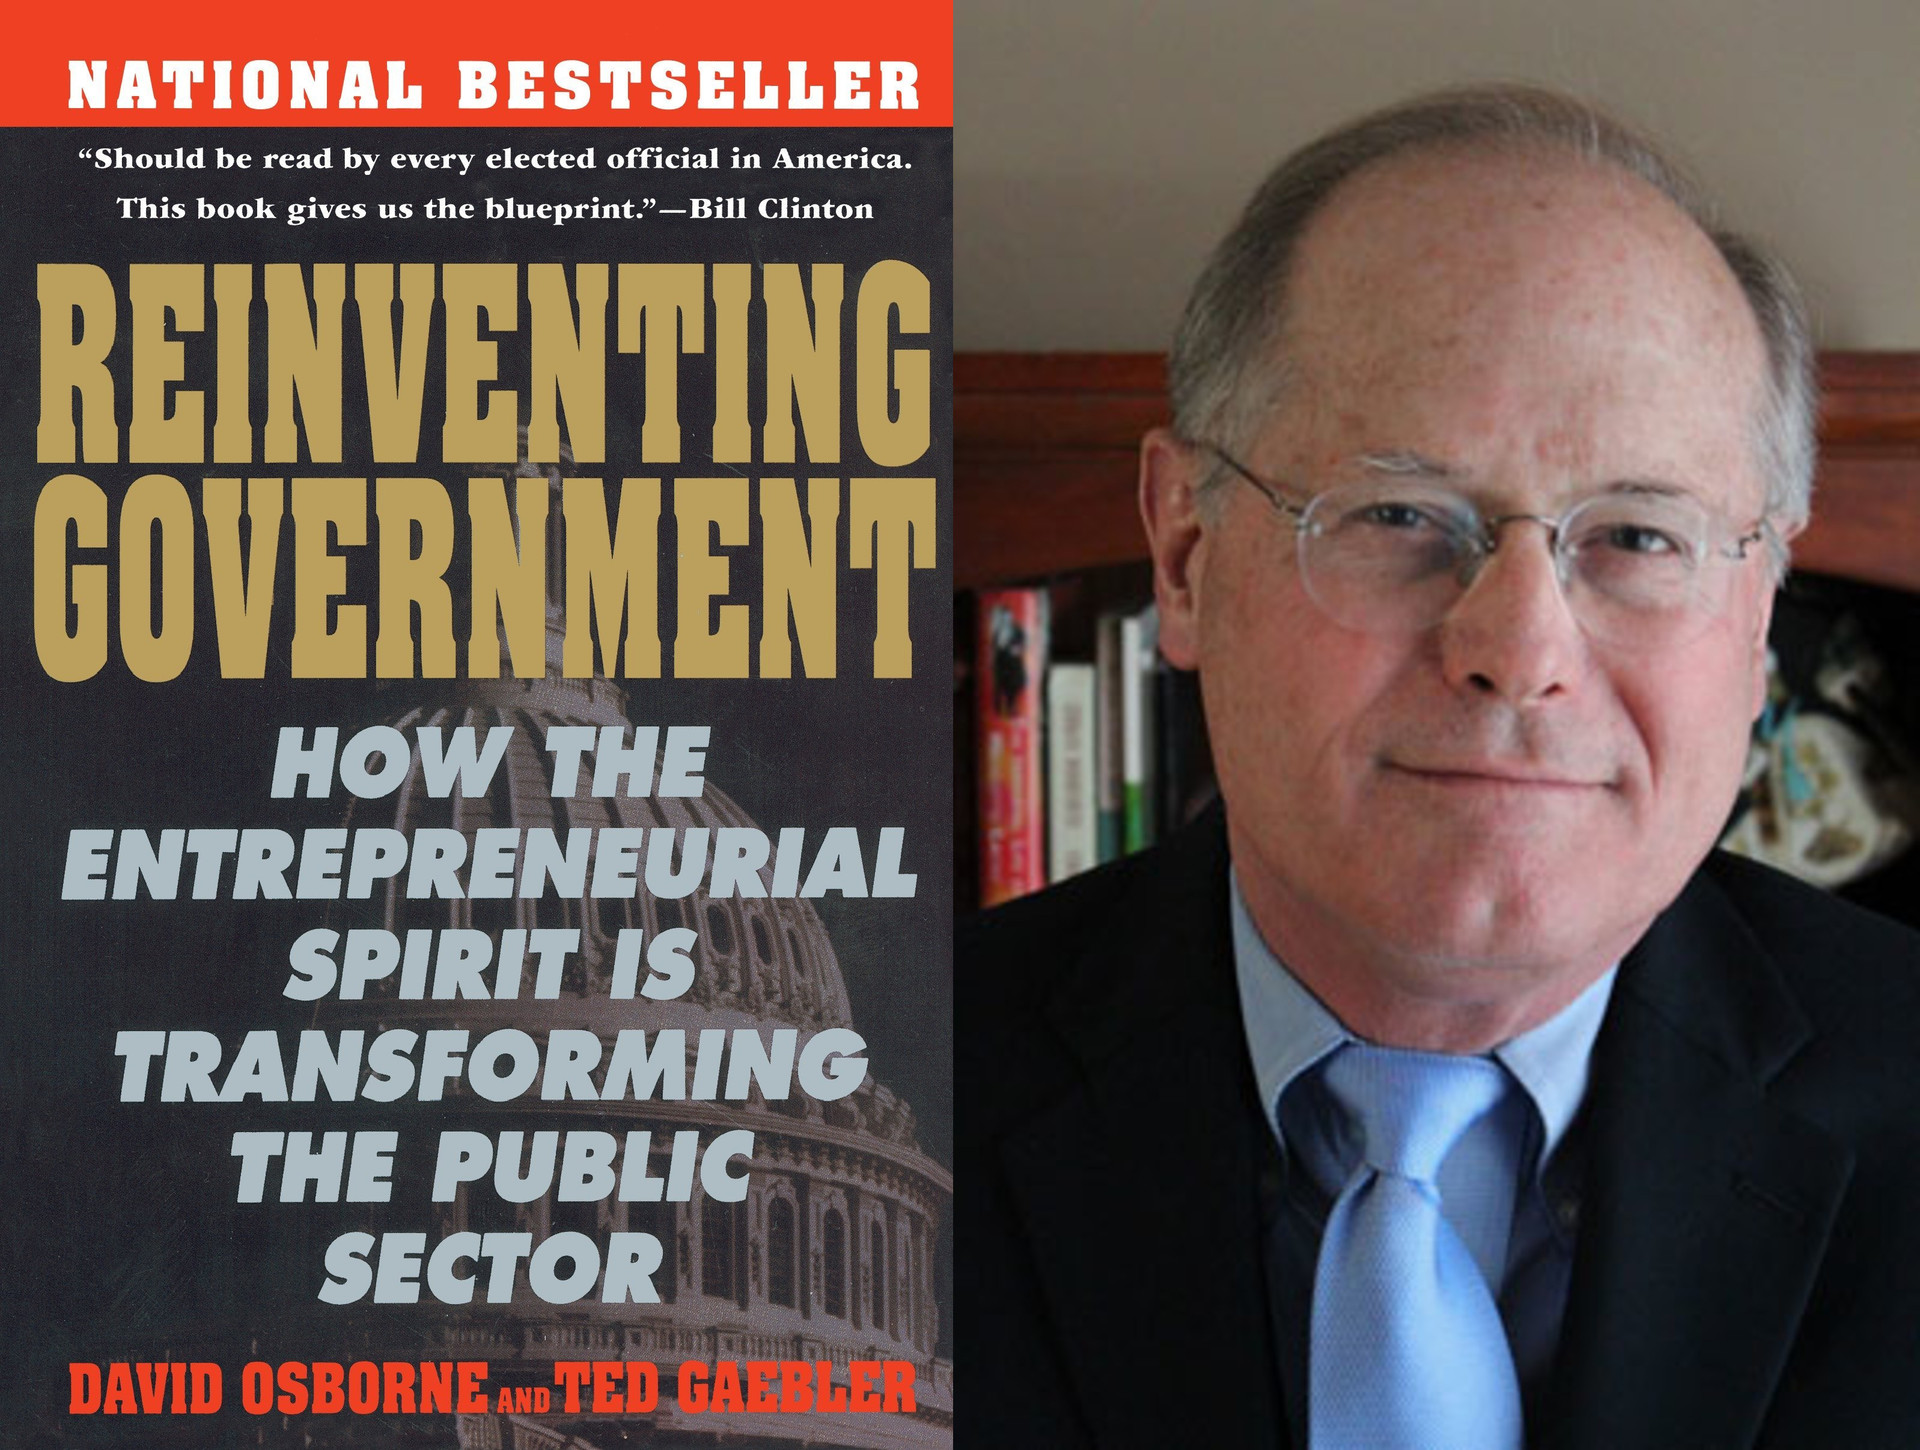 D. Osborne, T. Gaebler&nbsp;— Reinventing Government: How the Entrepreneurial Spirit is Transforming the Public Sector